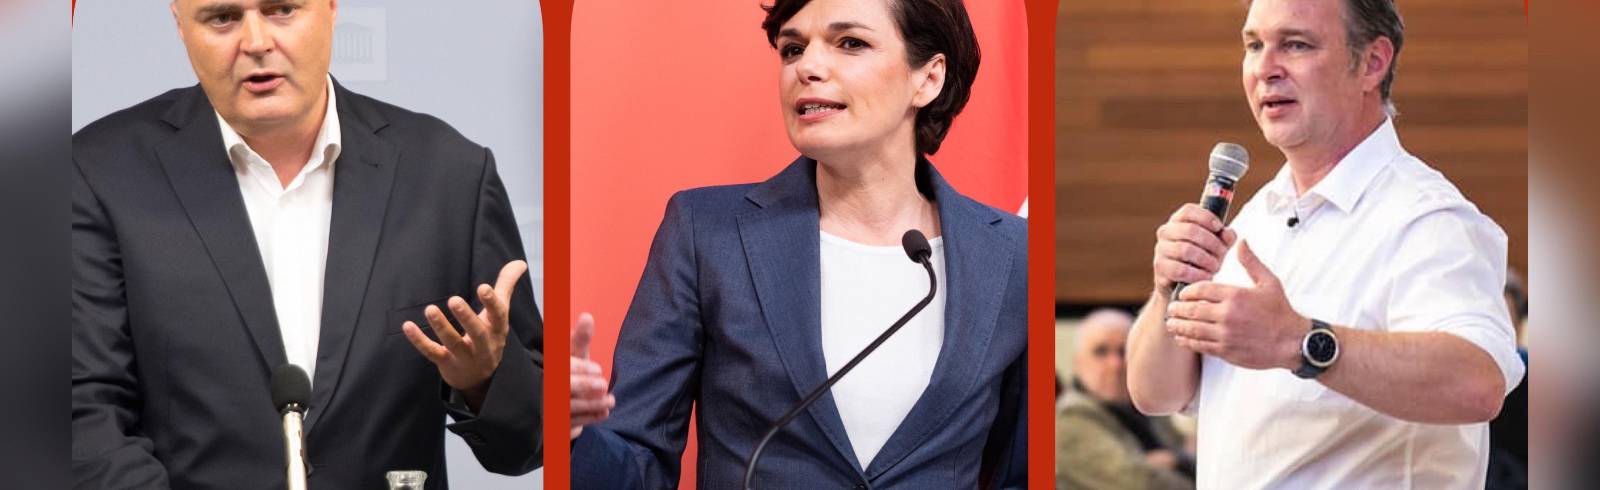 SPÖ: Spannung steigt